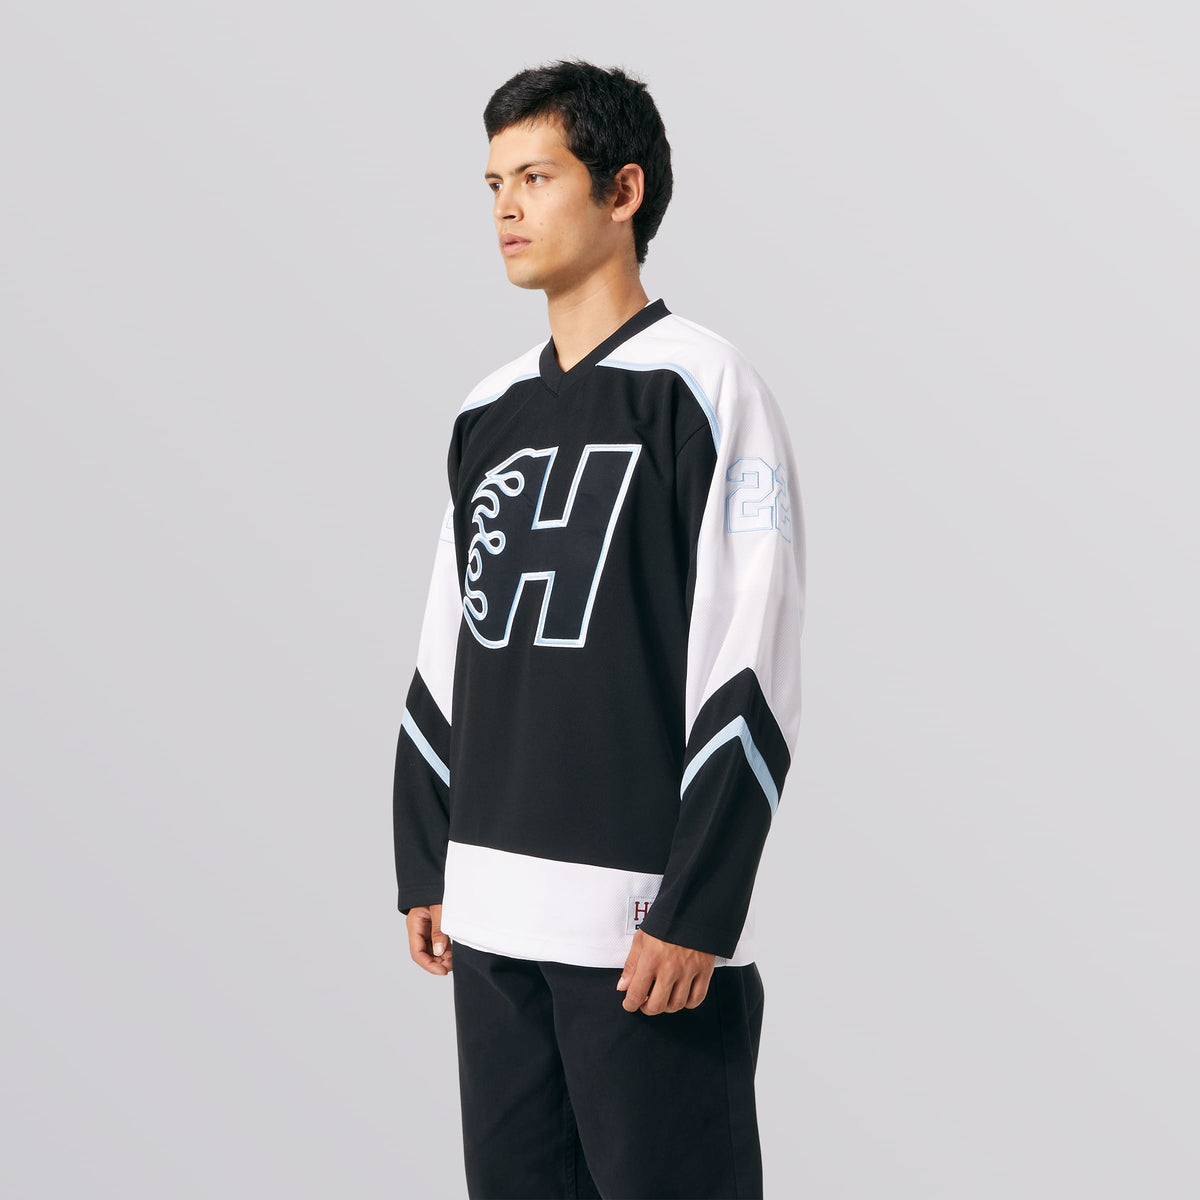 Huf Enforcer Hockey Jersey - White